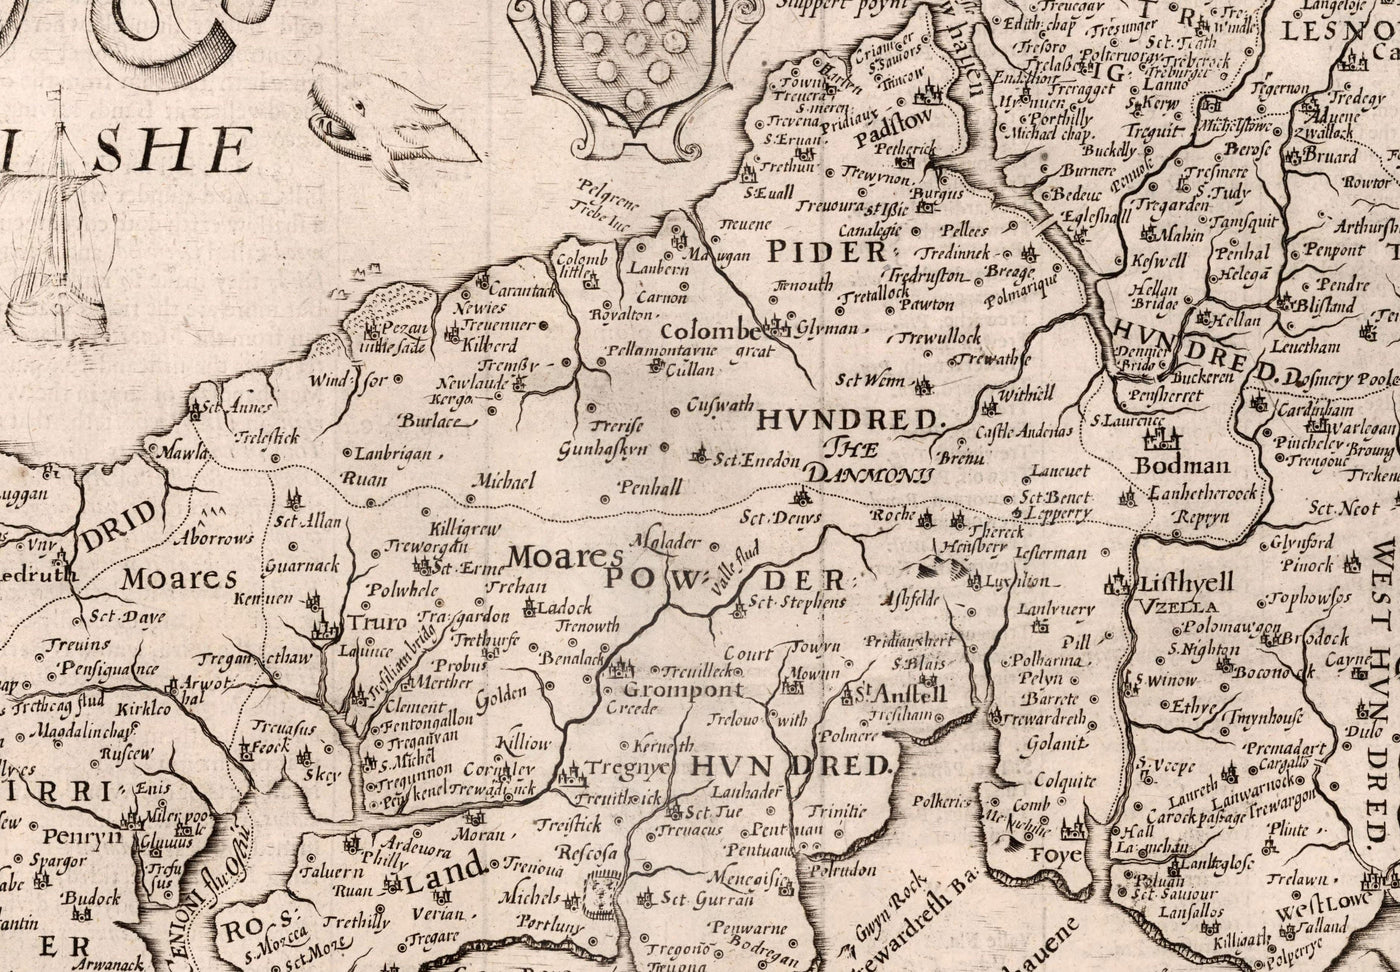 Viejo mapa de Cornwall en 1611 por Speed ​​- Penzance, St Ives, Plymouth, Tierres End, Padstow